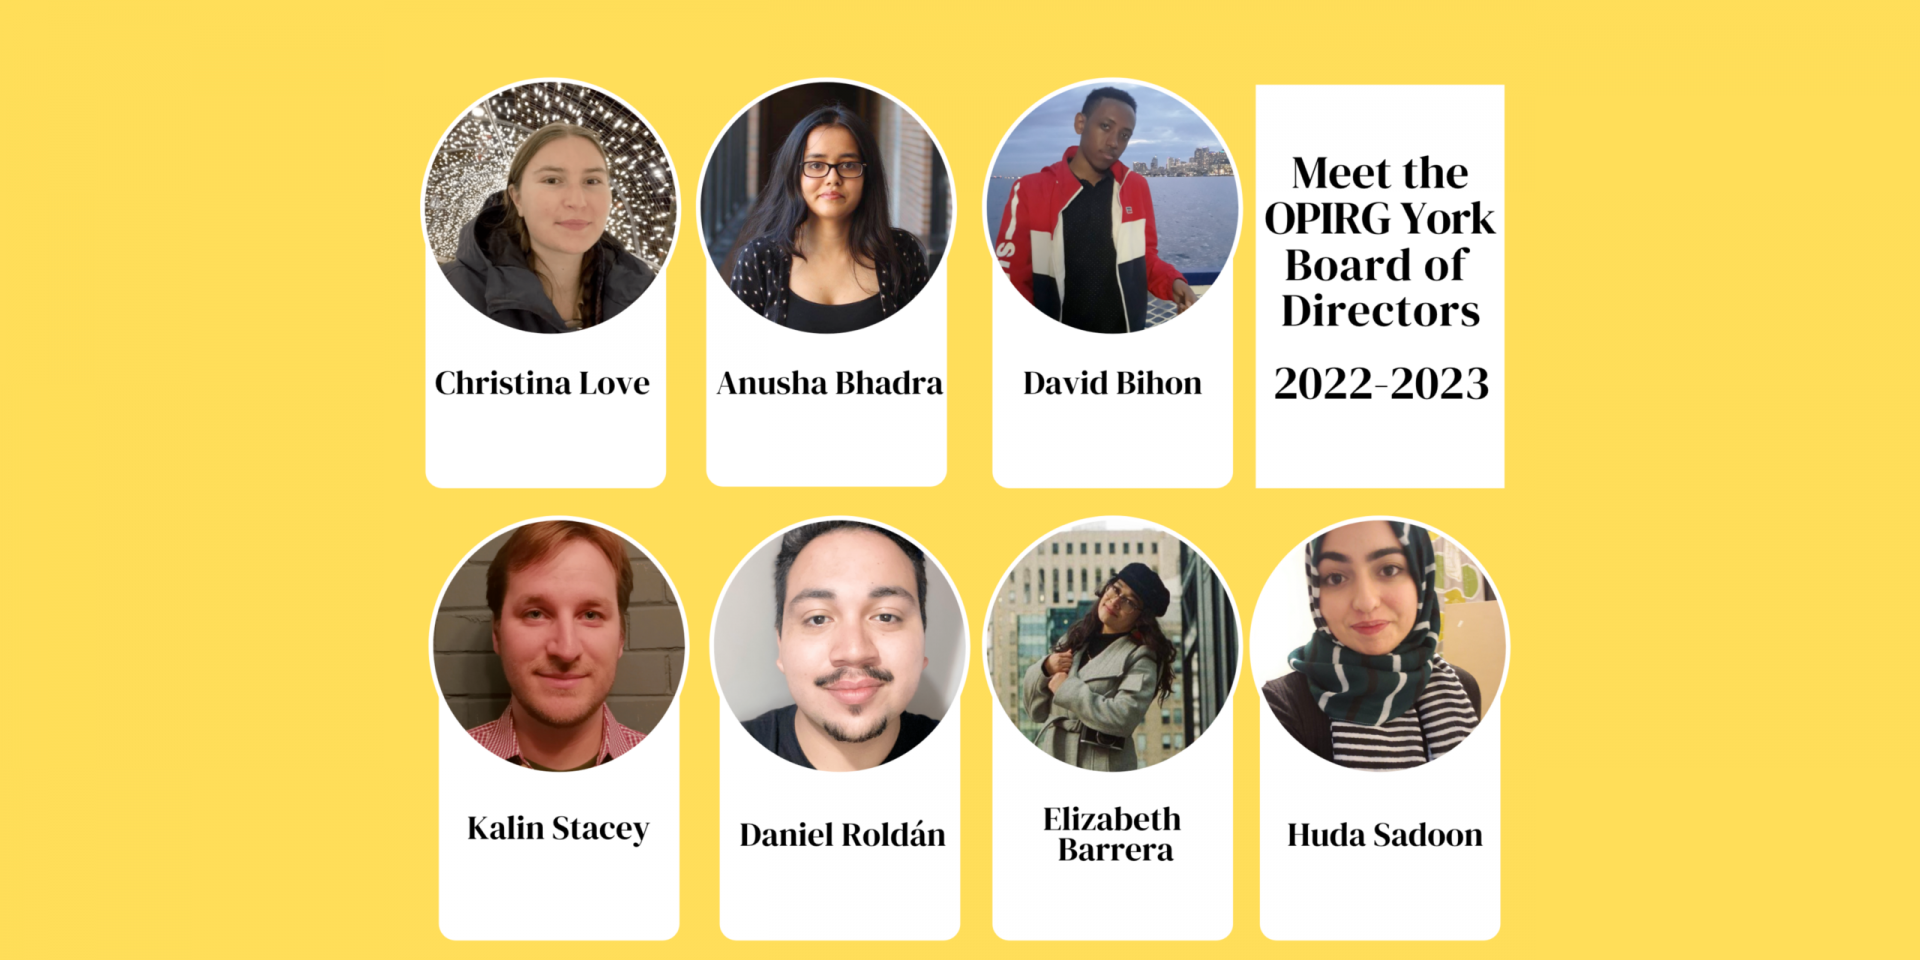 Meet the OPIRG York Board of Directors for 2022-2023 Welcome and welcome back to: Christina Love, Anusha Bhadra, David Bihon, Kalin Stacey, Daniel Roldan, Elizabeth Barrera, and Huda Sadoon